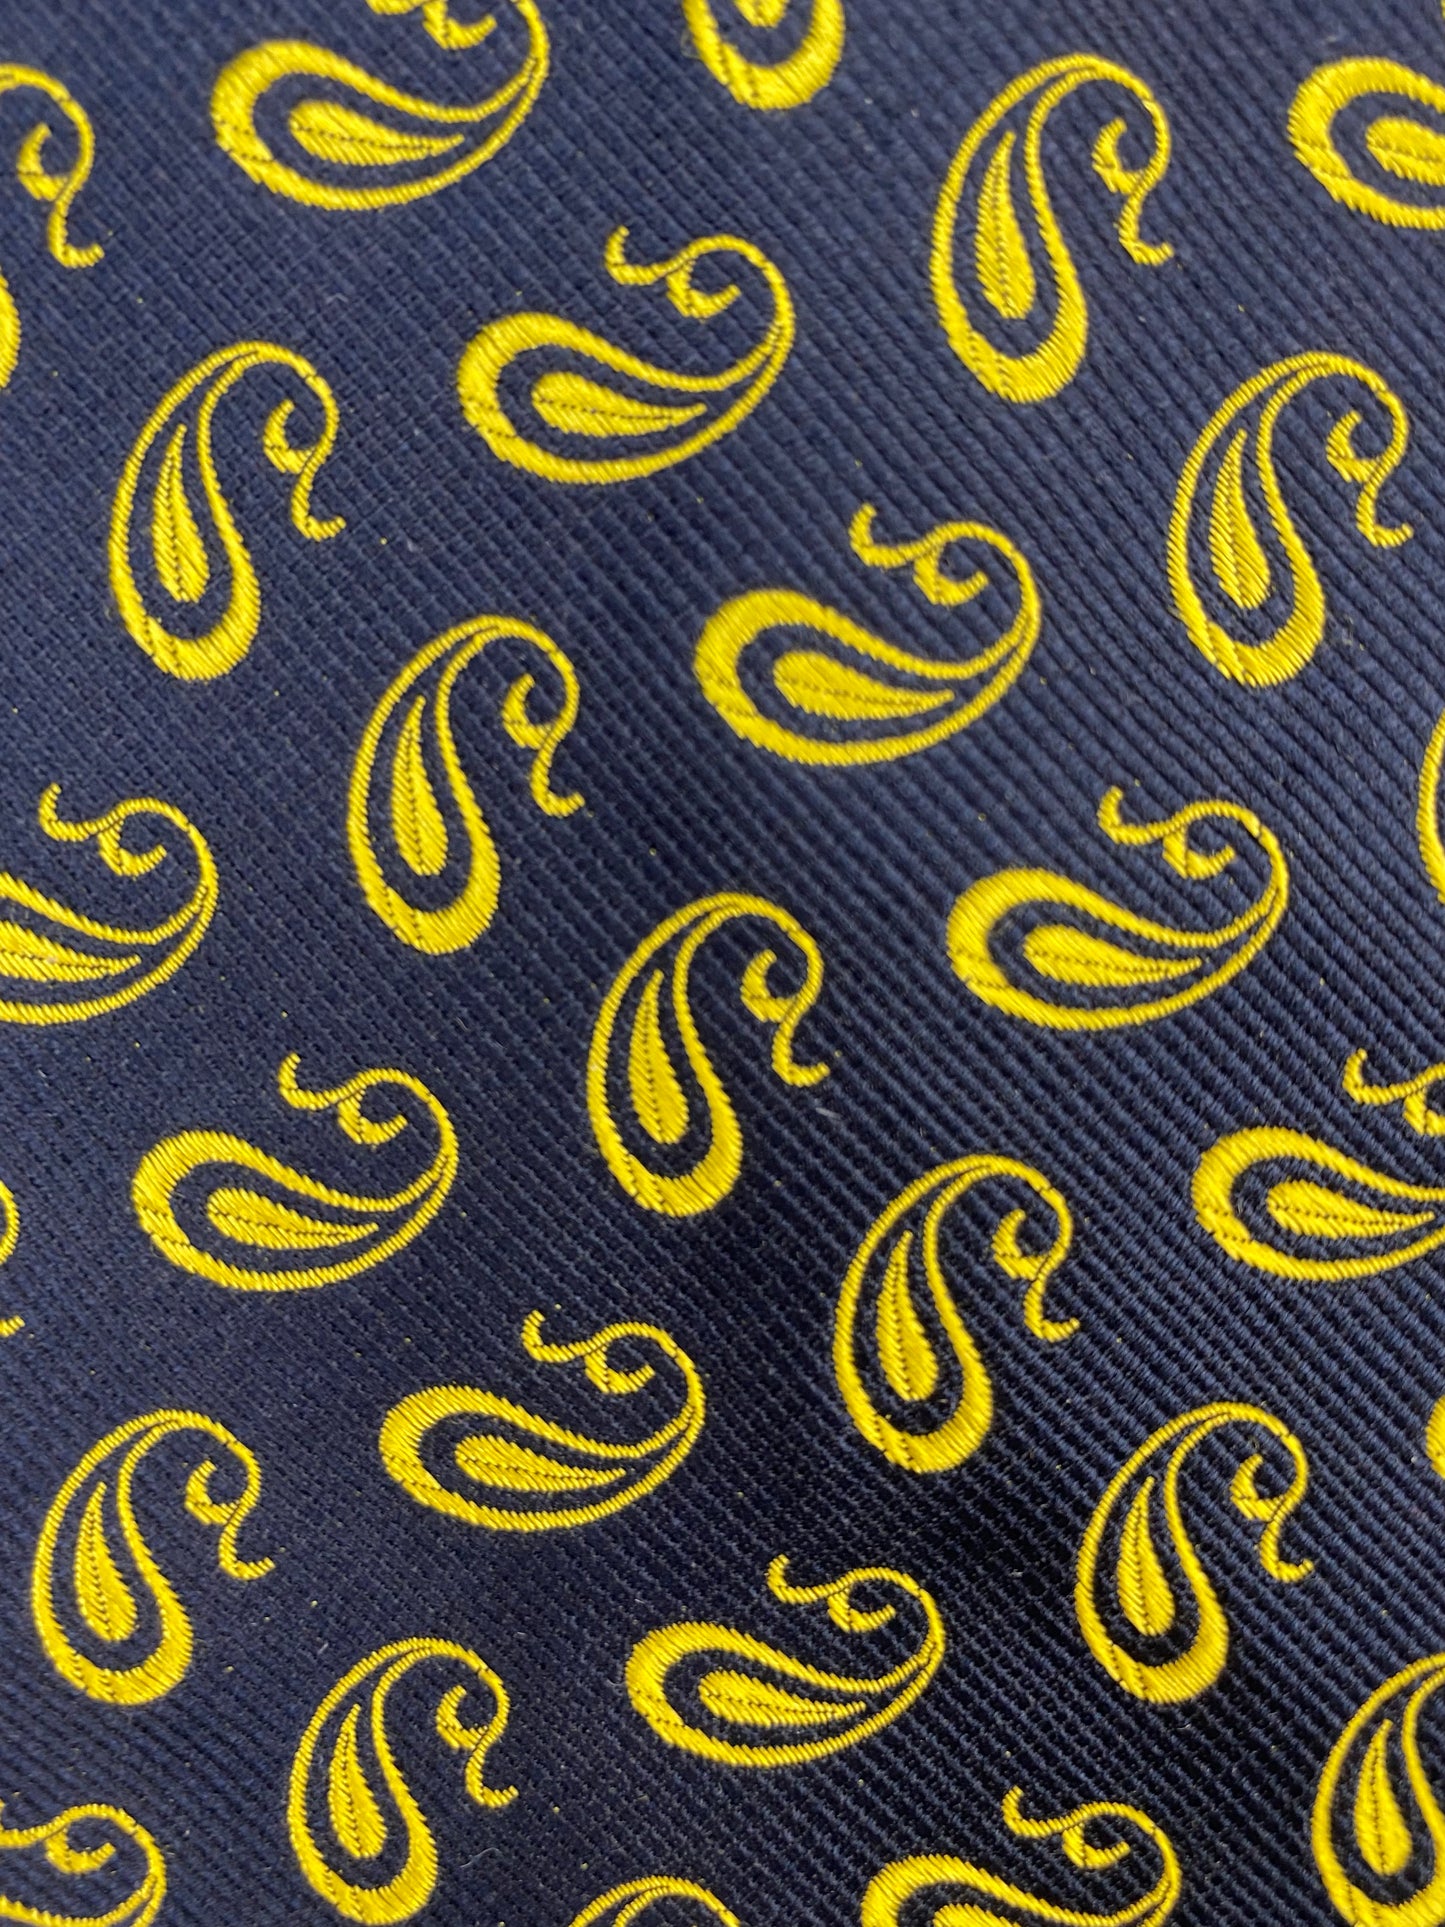 Close-up pattern detail of: 90s Deadstock Silk Necktie, Men's Vintage Gold Navy Modern Boteh Paisley Pattern Tie, NOS